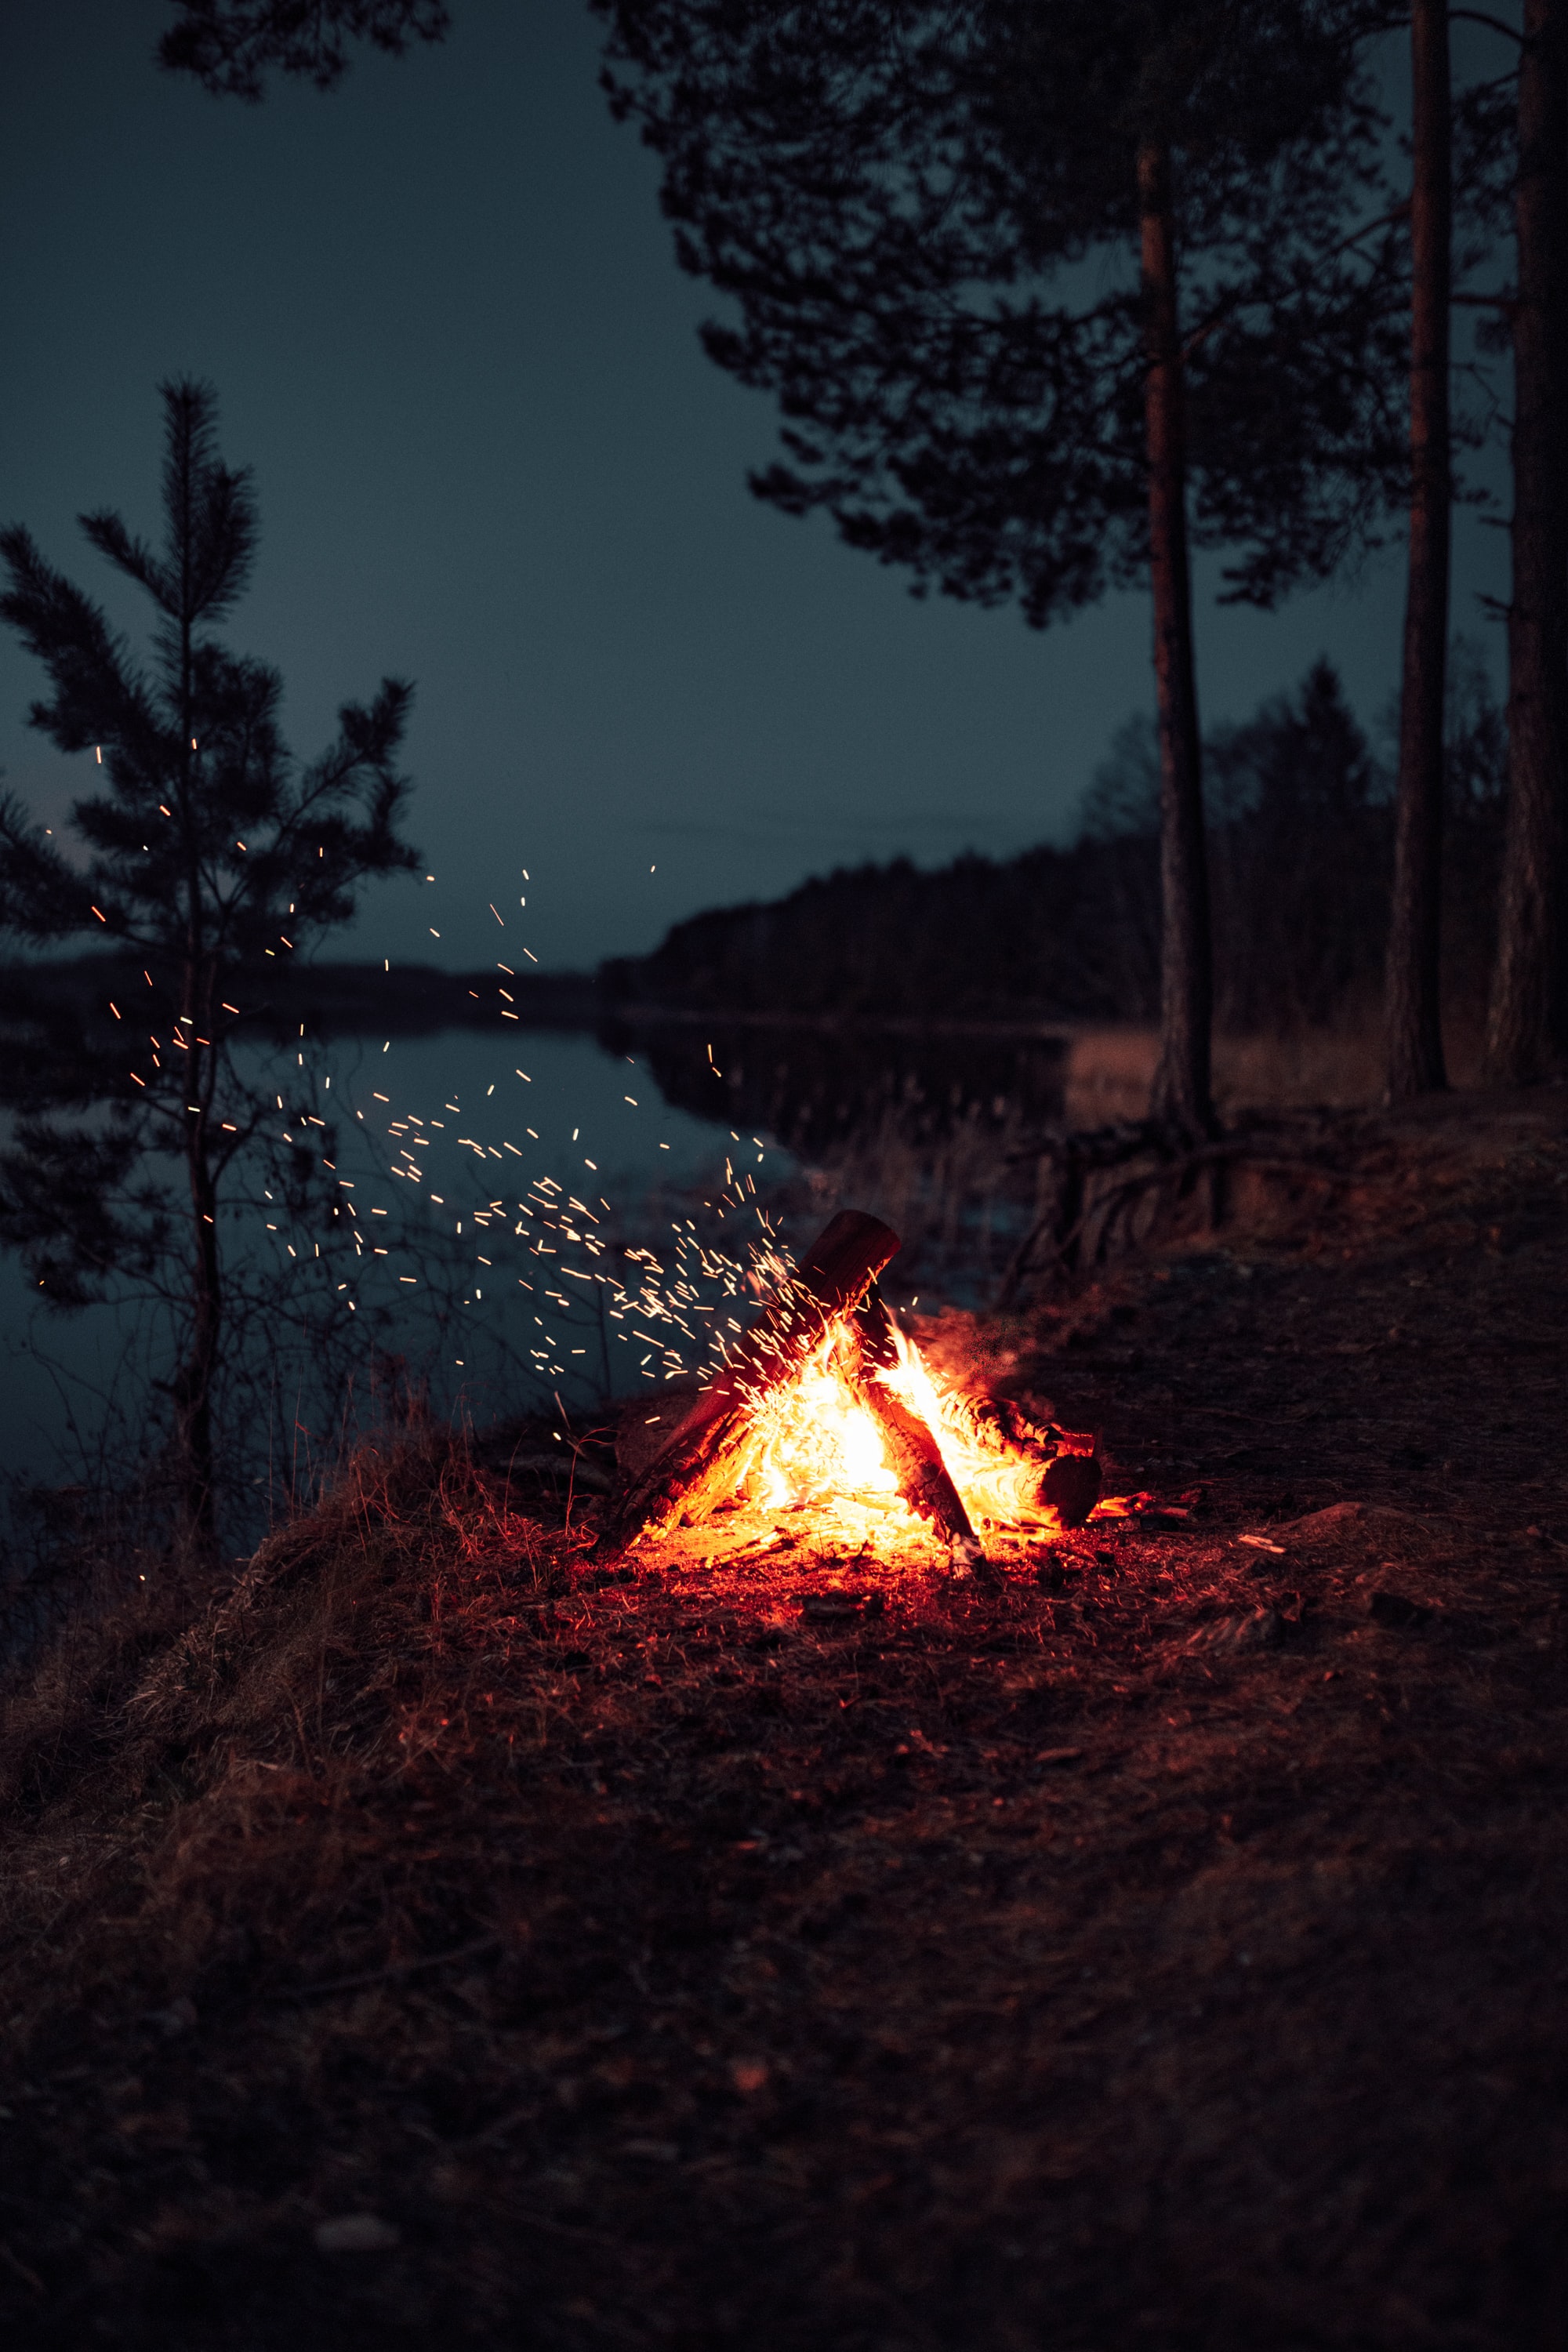 dark, bonfire, camping, sparks, night, campsite